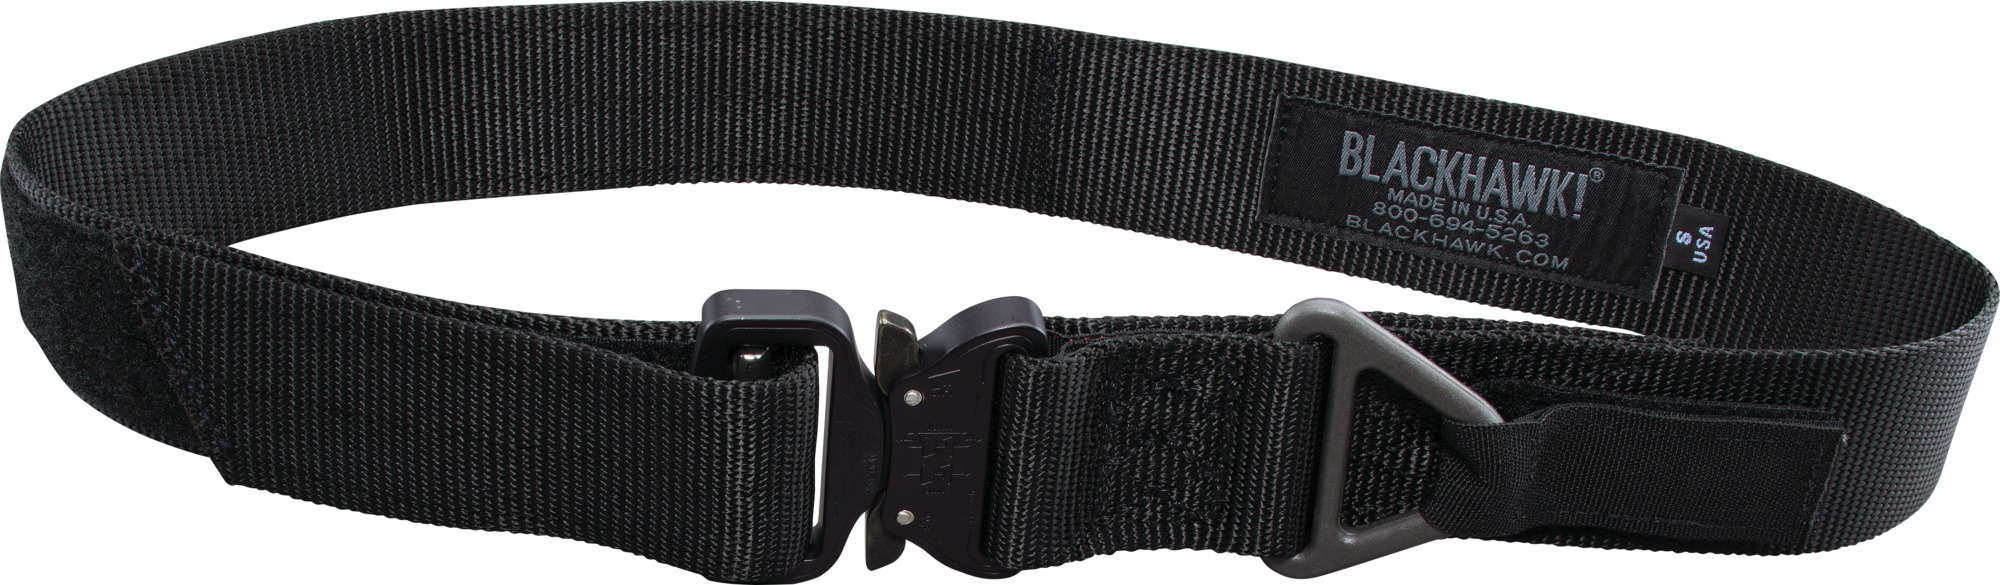 Blackhawk Rigger's Belt Cobra Buckle 34 Black